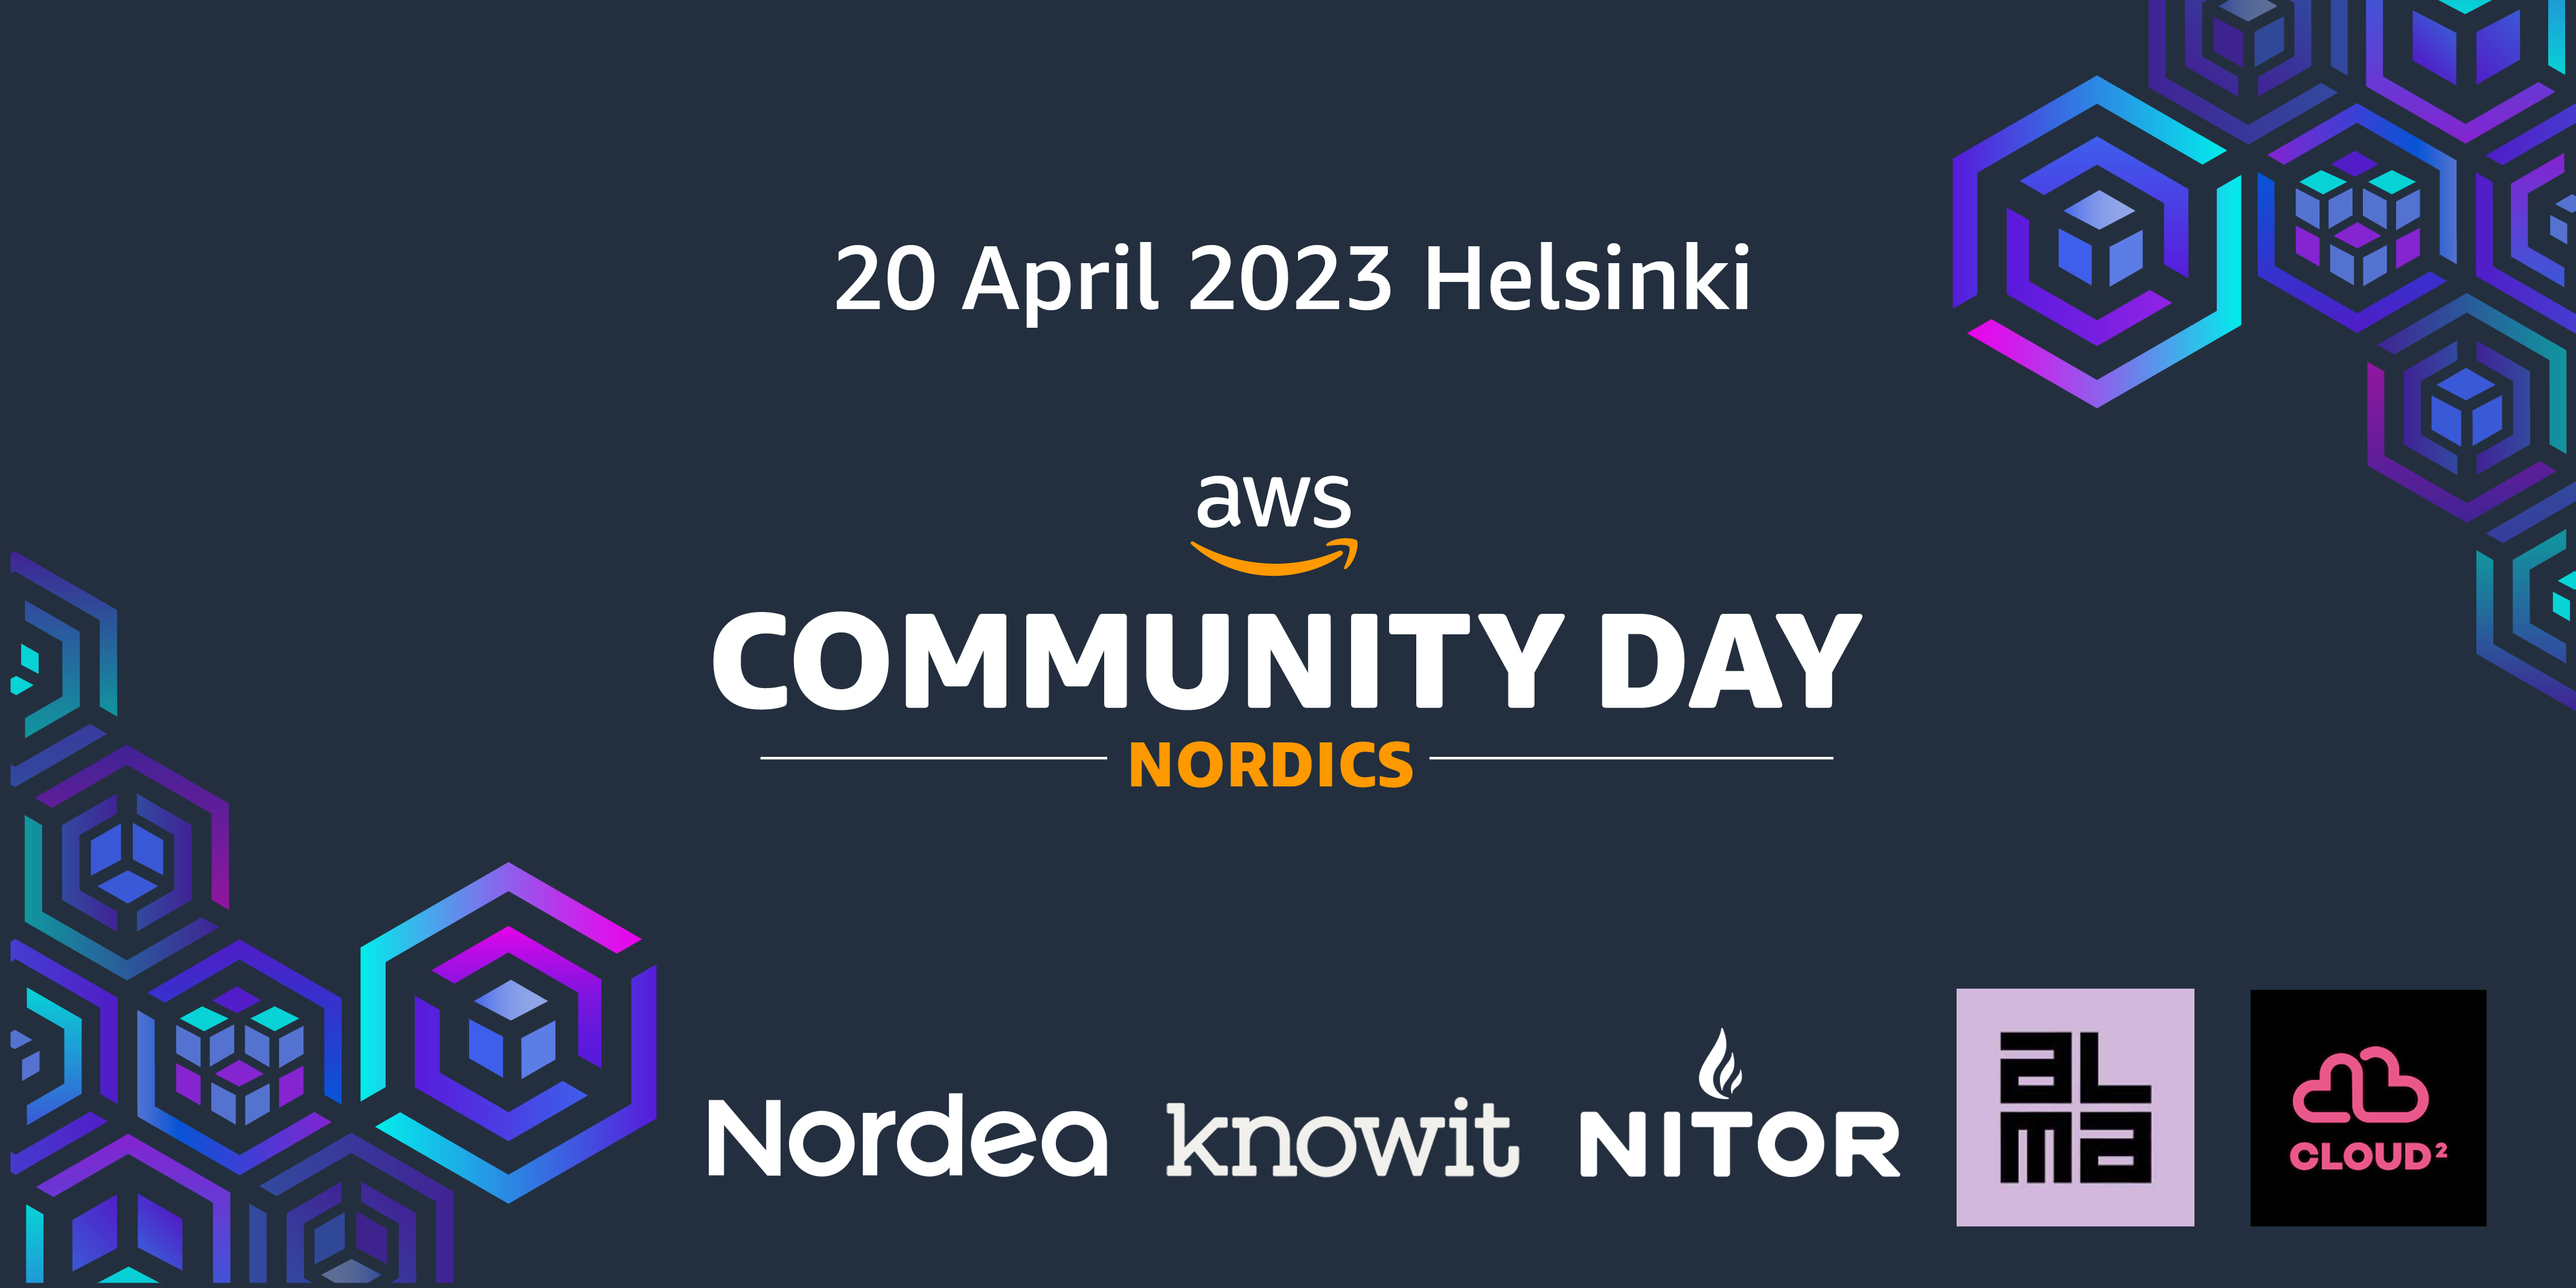 AWS Community Day Nordics 2023 announced